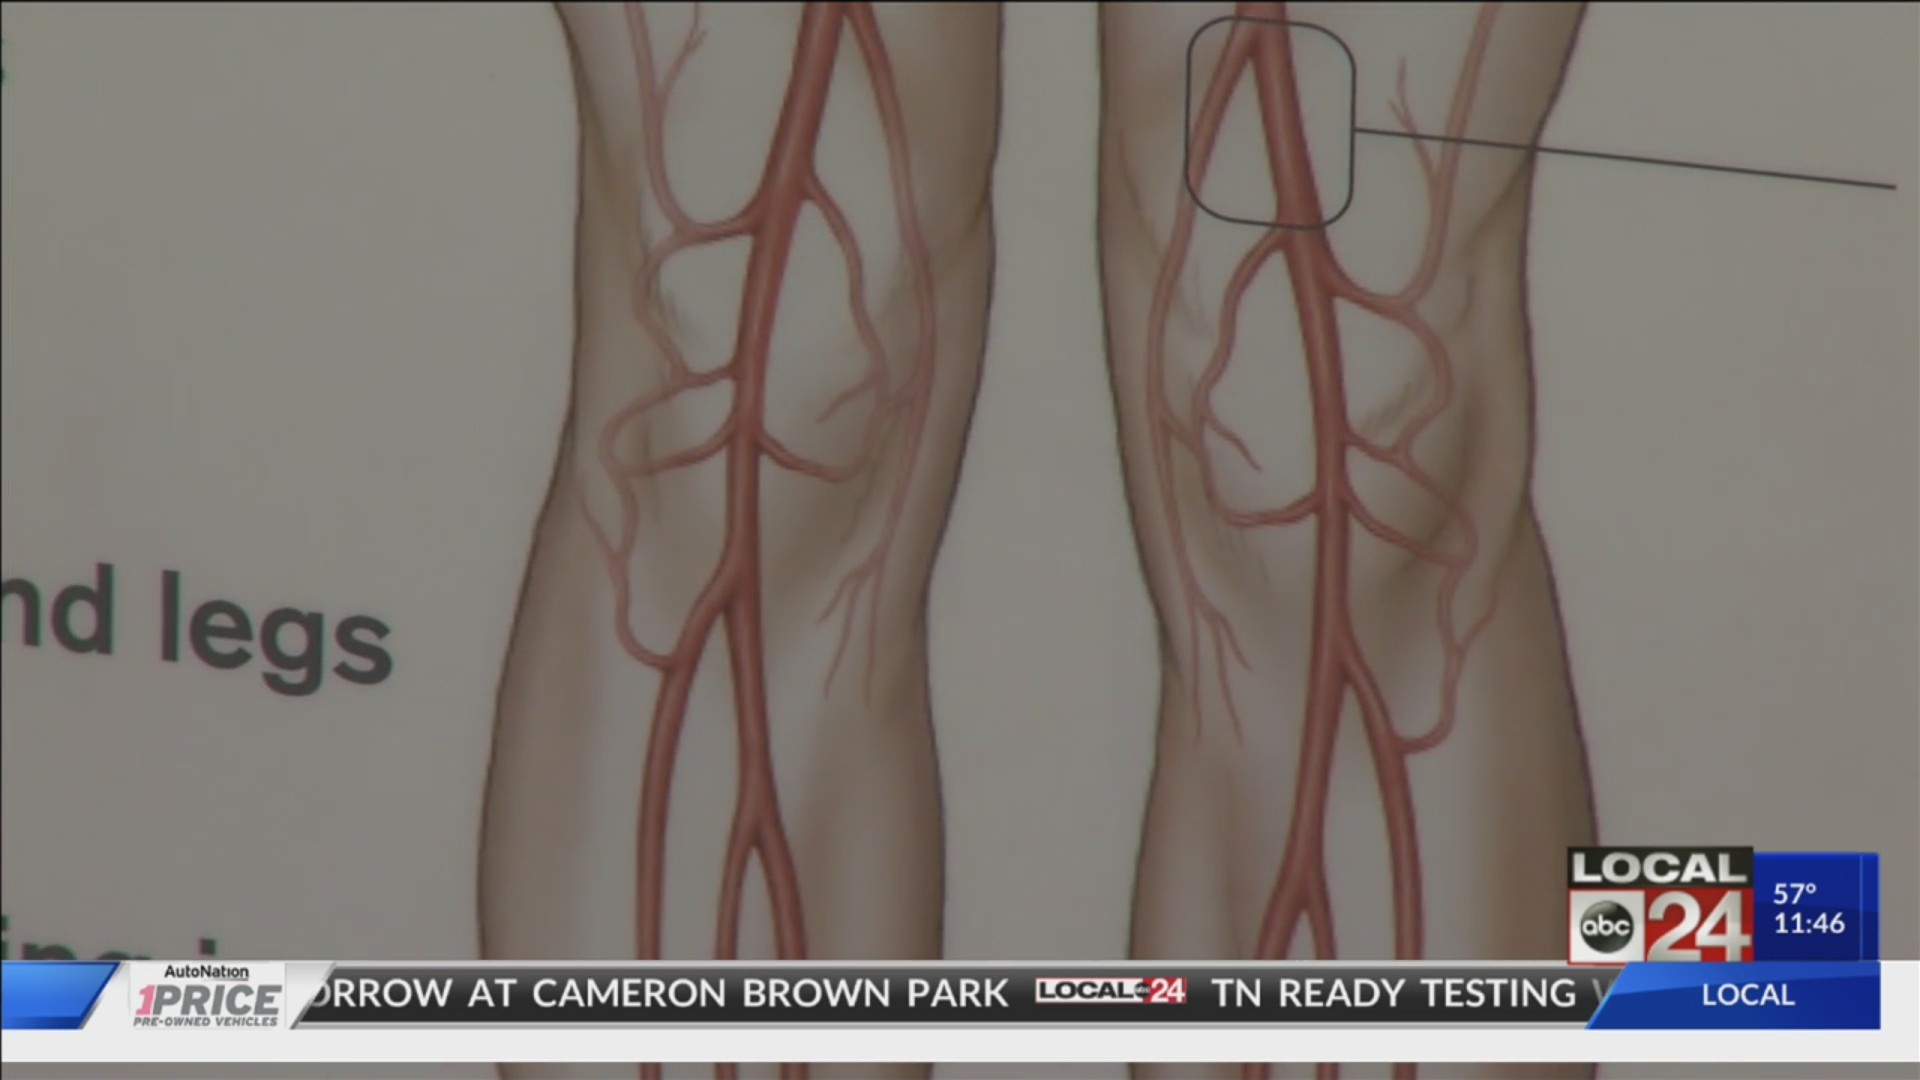 Local Health Alert: Wound Healing & Limb Preservation